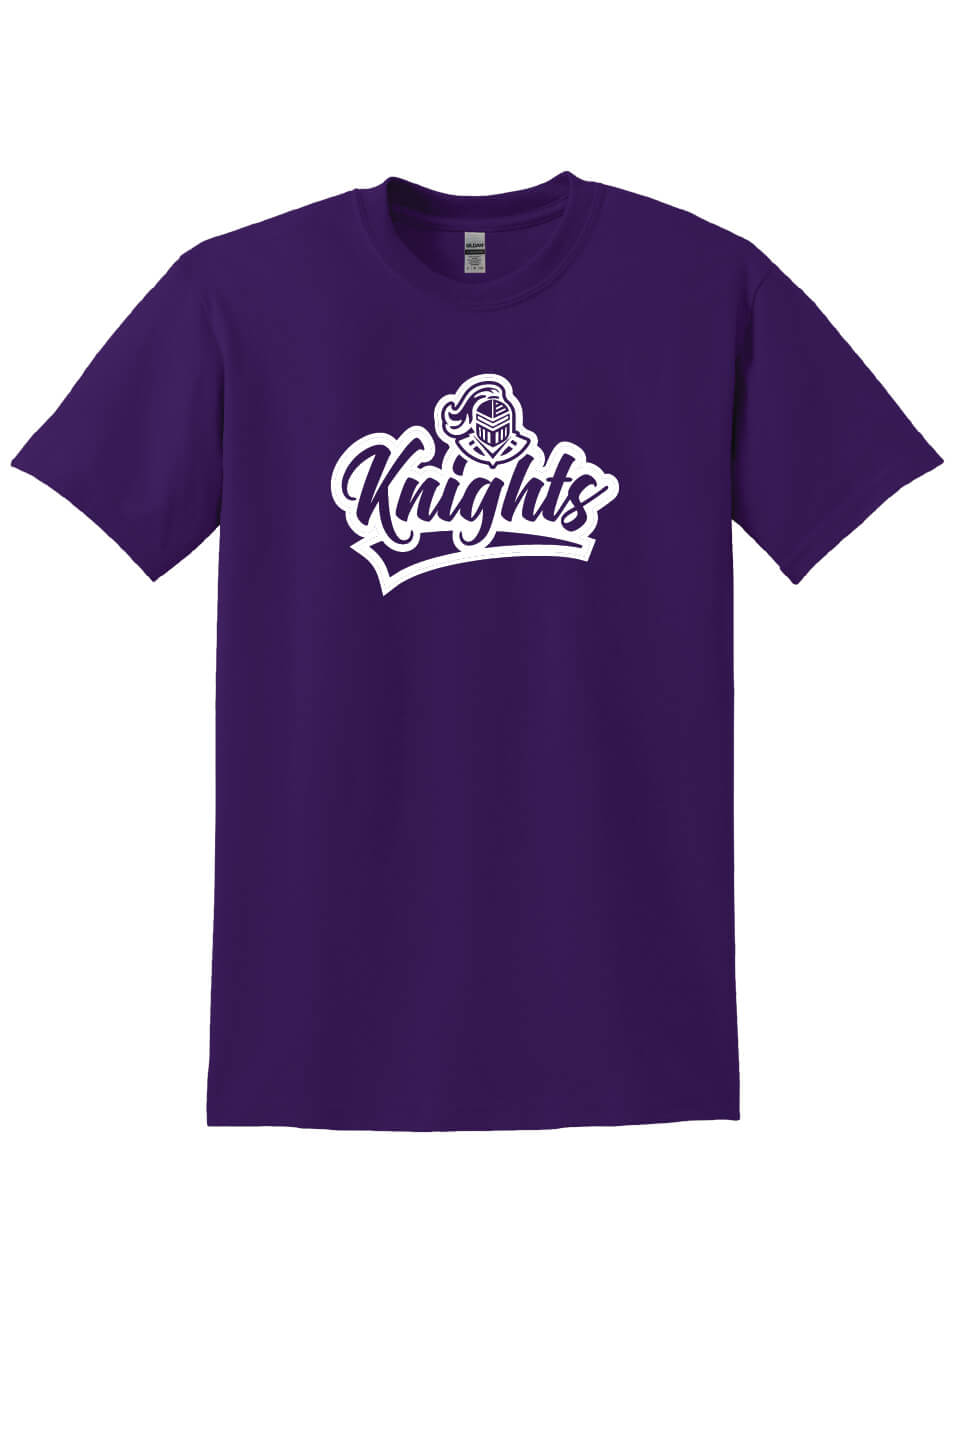 Knights Short Sleeve T-Shirt purple